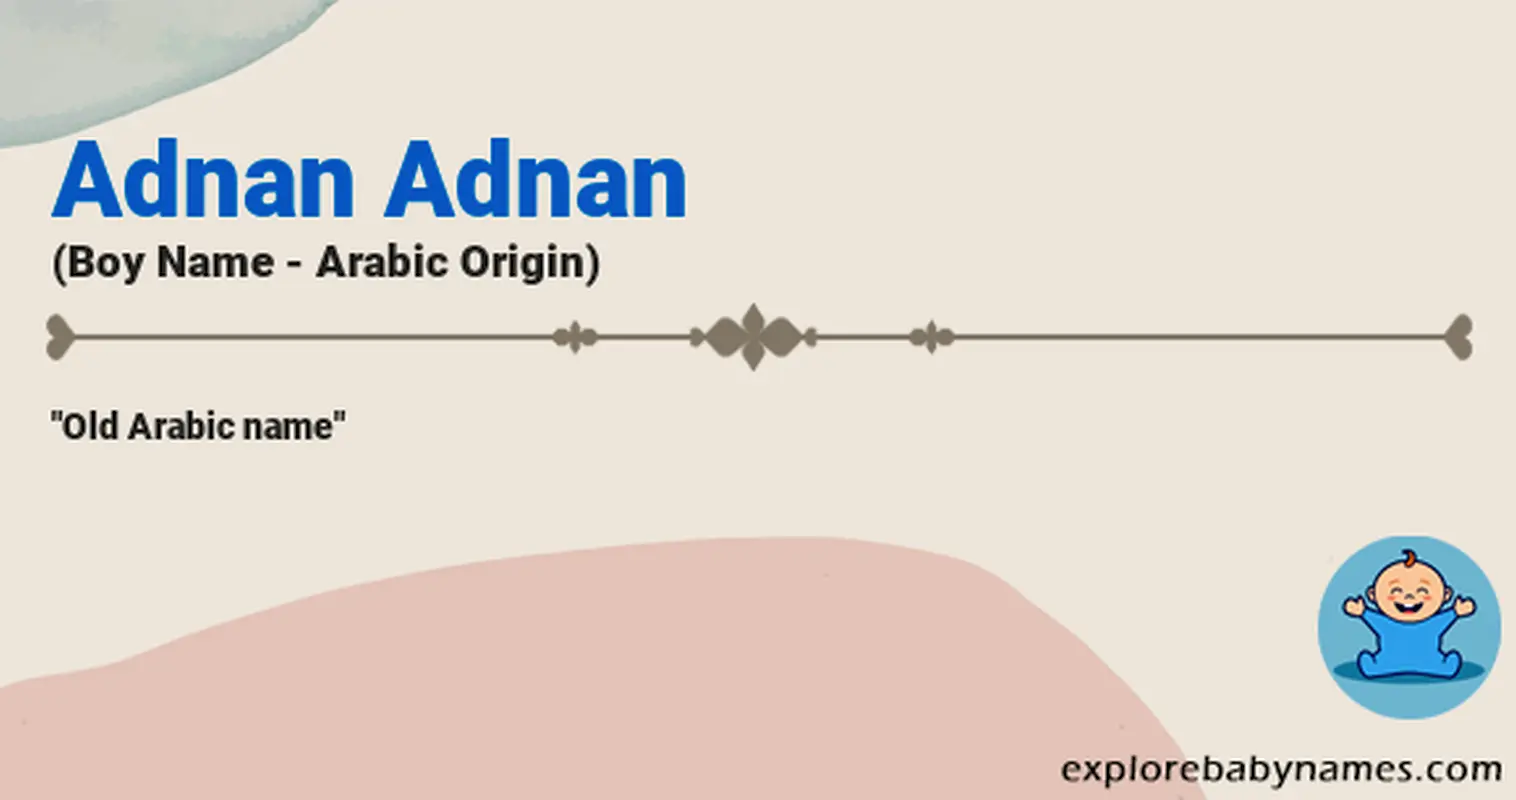 Meaning of Adnan Adnan